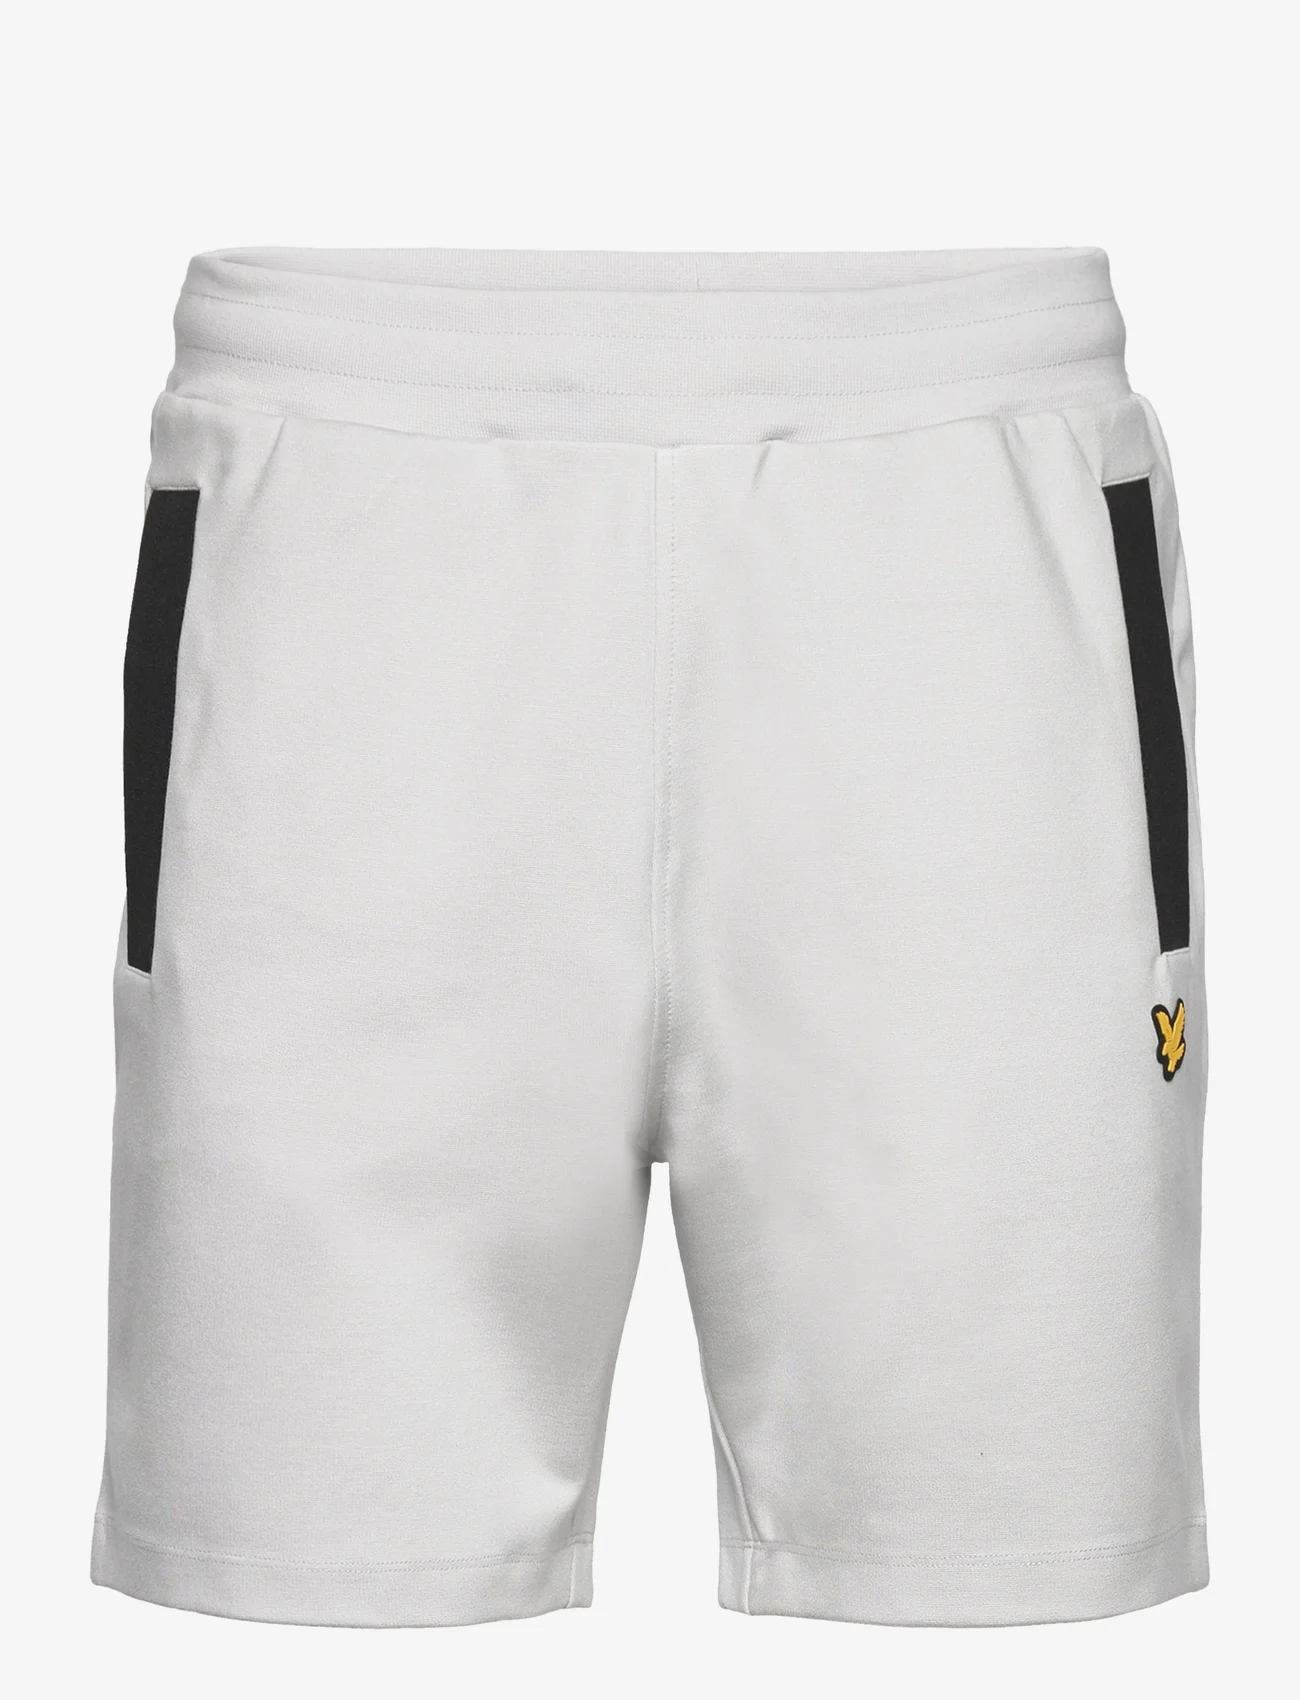 Lyle & Scott Sport - Pocket Branded Shorts - sports shorts - z04 pebble - 0